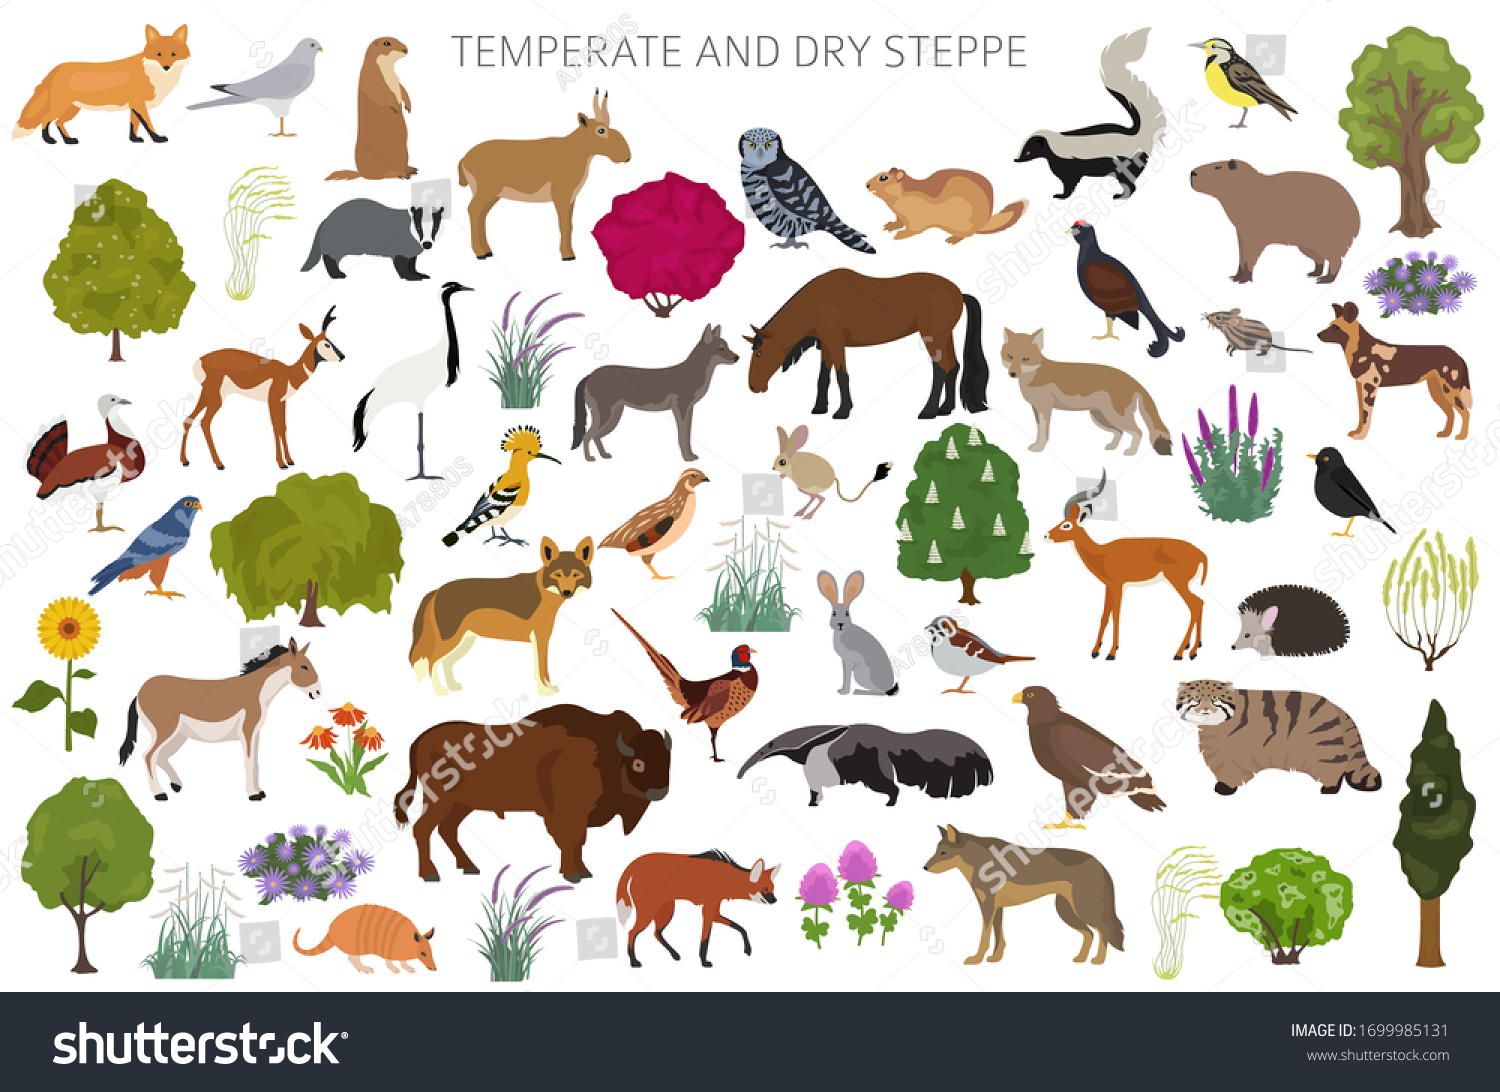 SVG of Temperate and dry steppe biome, natural region infographic. Prarie, steppe, grassland, pampas. Animals, birds and vegetations ecosystem design set. Vector illustration svg